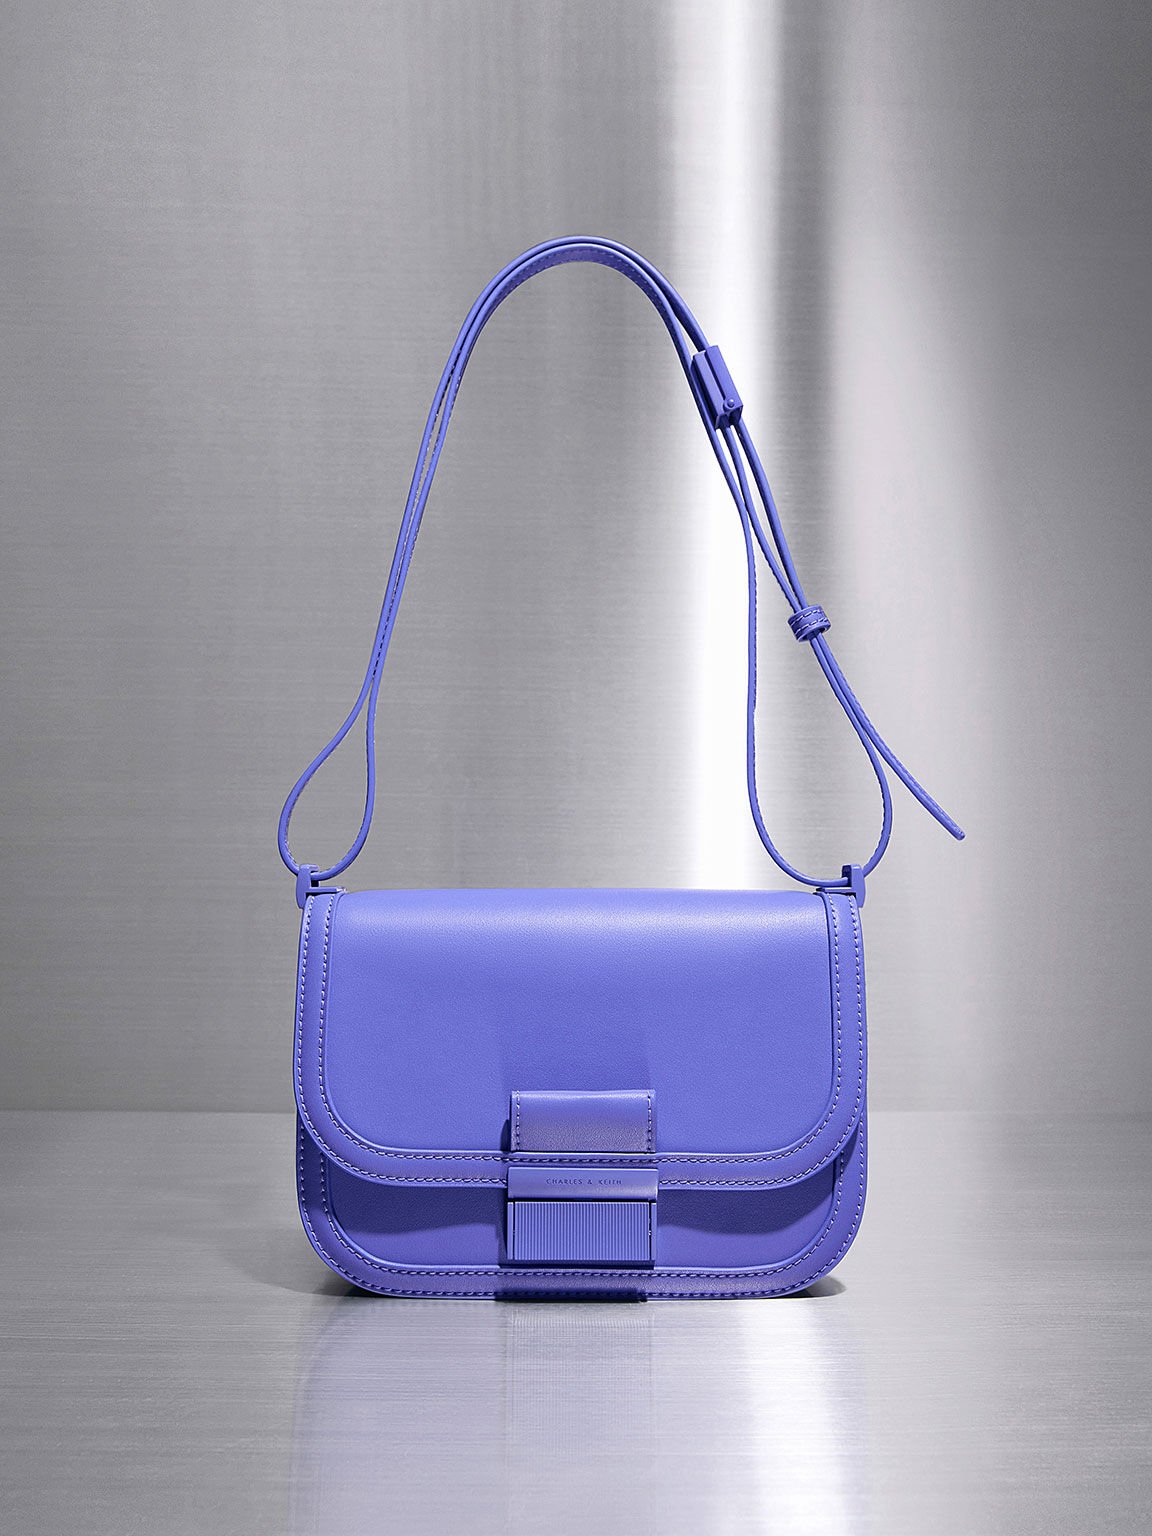 Product Spotlight: Zara Handbags That Look High-End - Voir Fashion